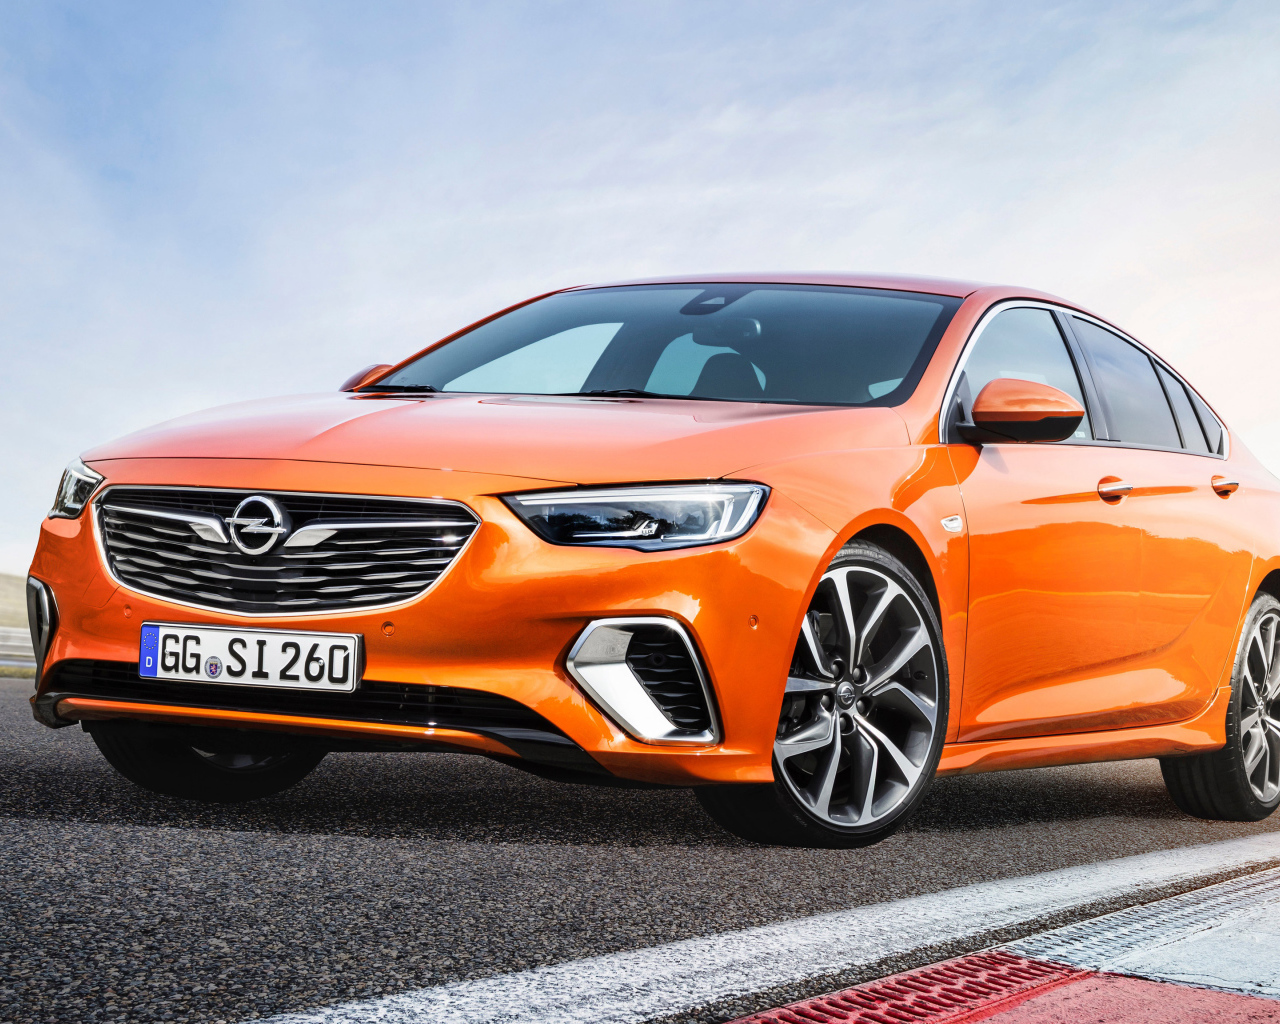 Stylish orange car Opel Insignia GSi, 2018